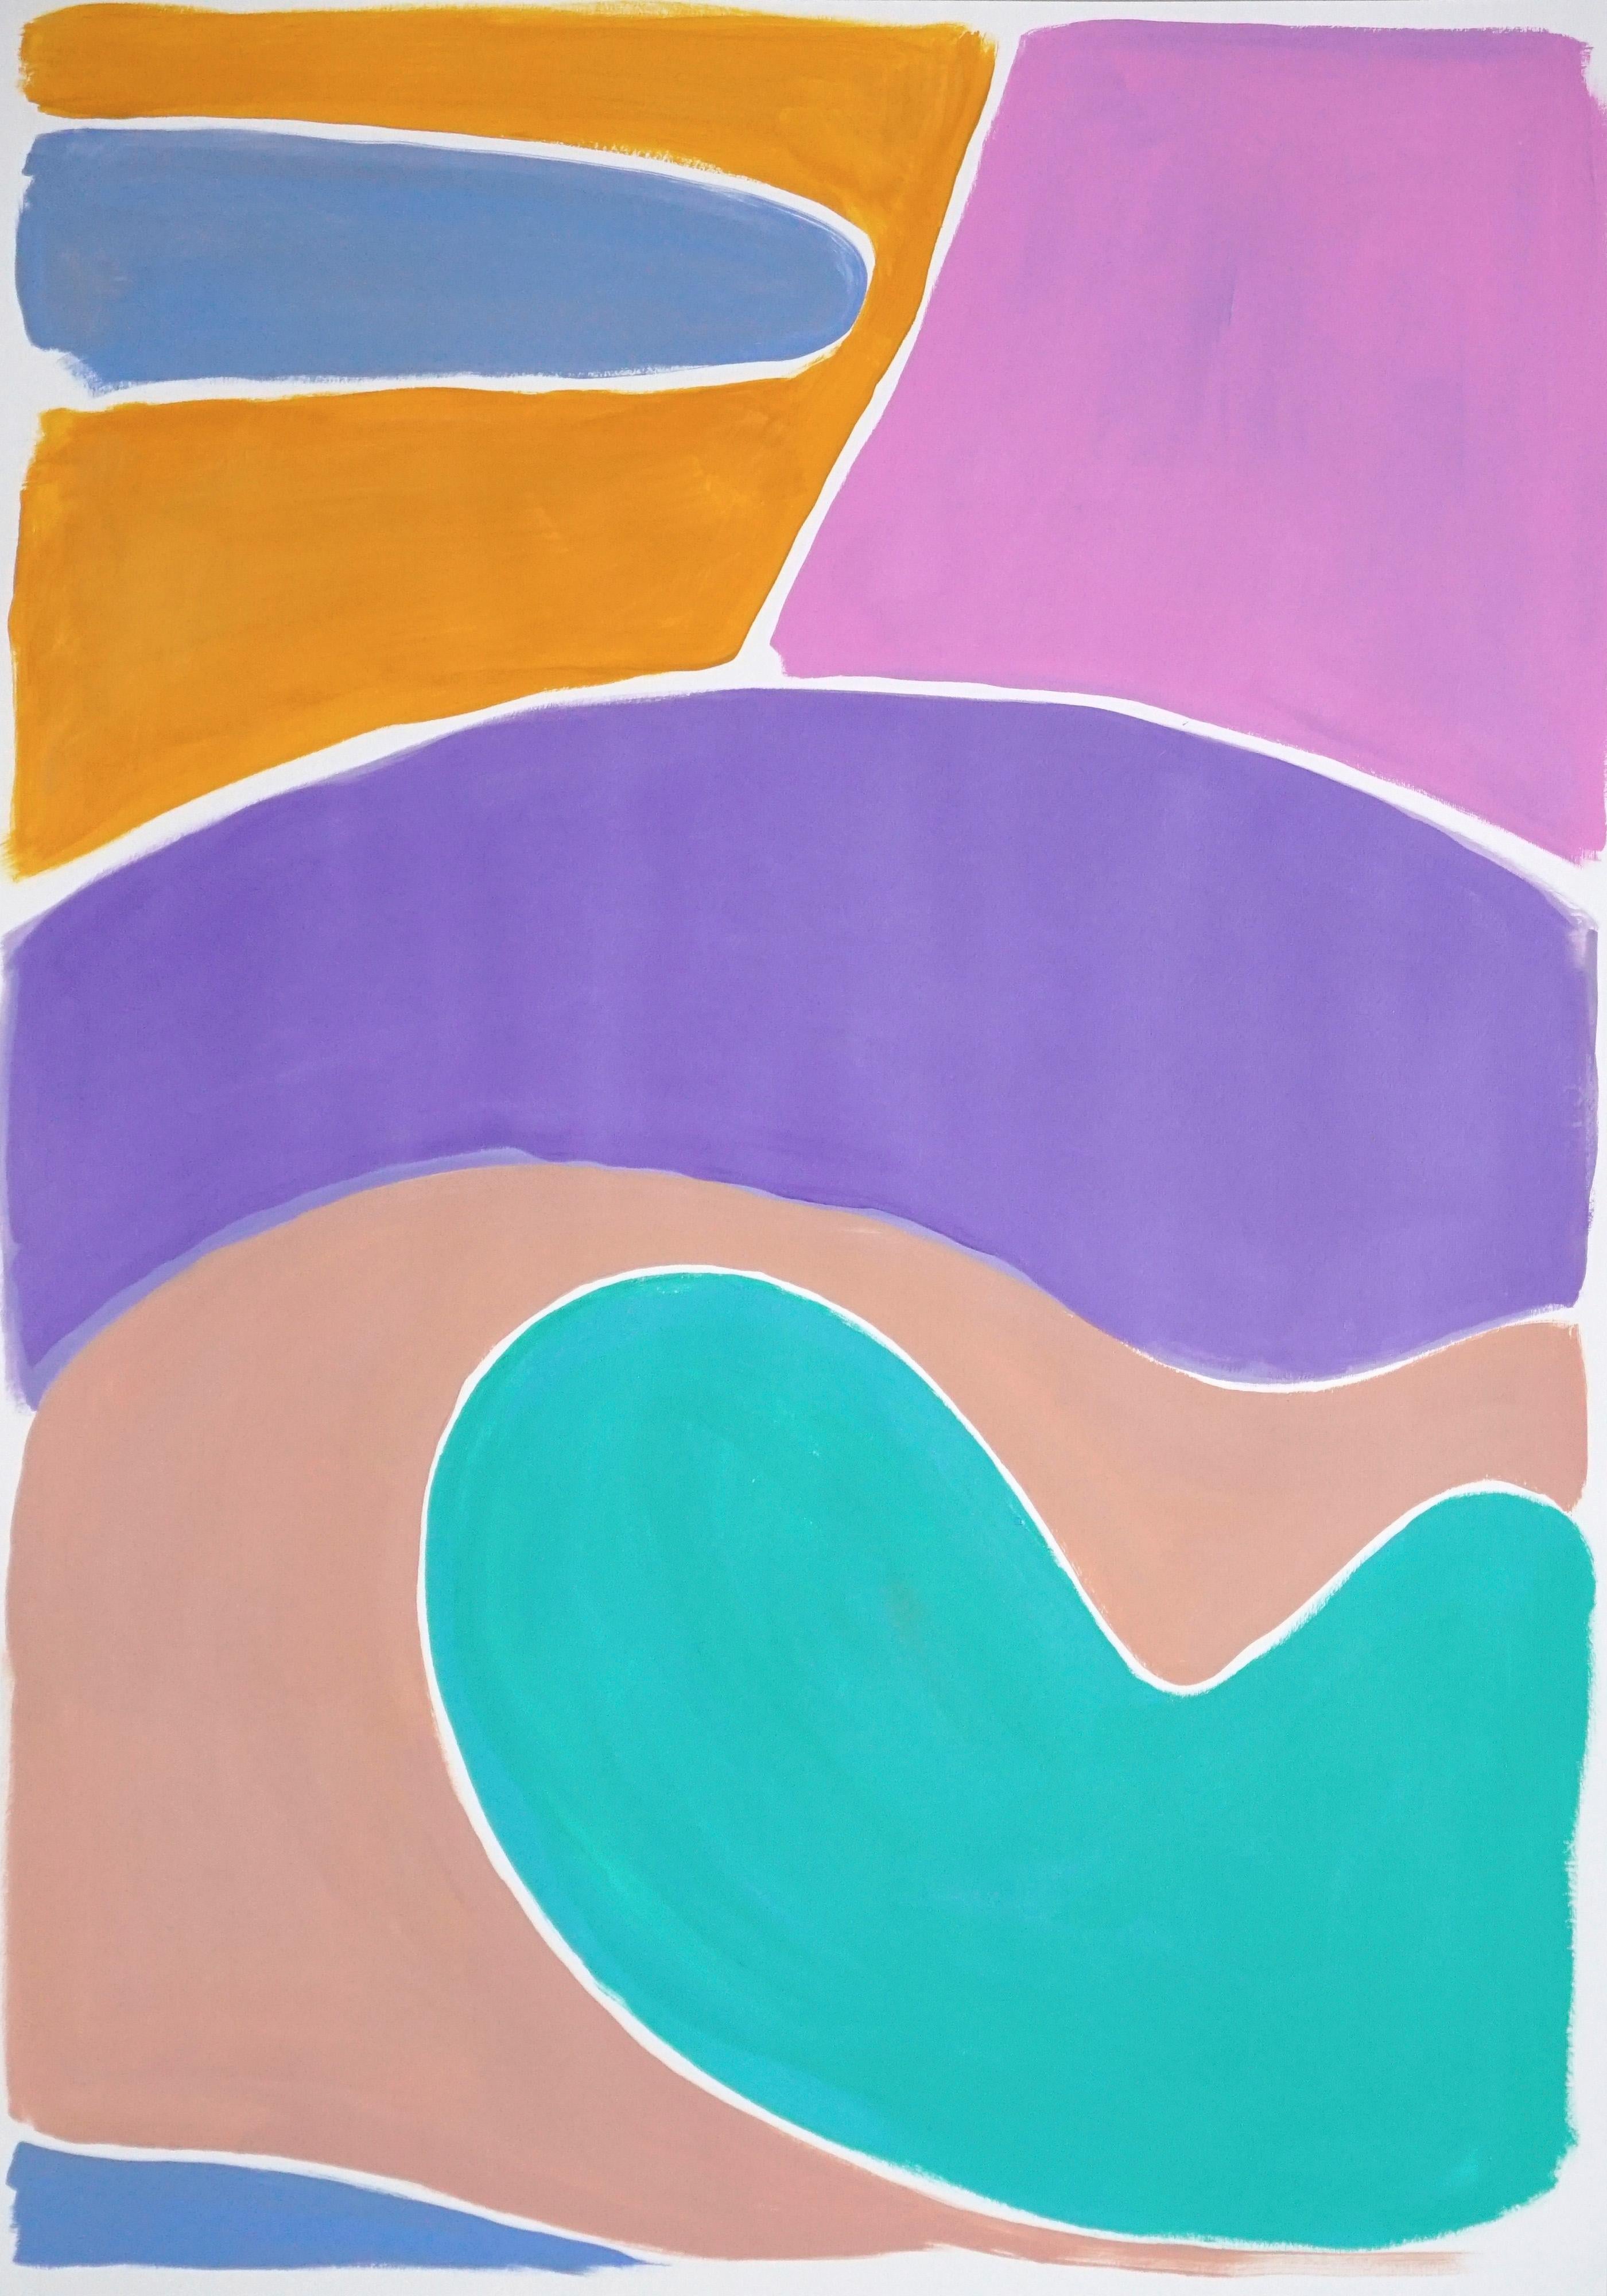 Kidney Pool Landscape in Pastel Tones, Naïf Shapes Painting in Vivid Tones, 2021